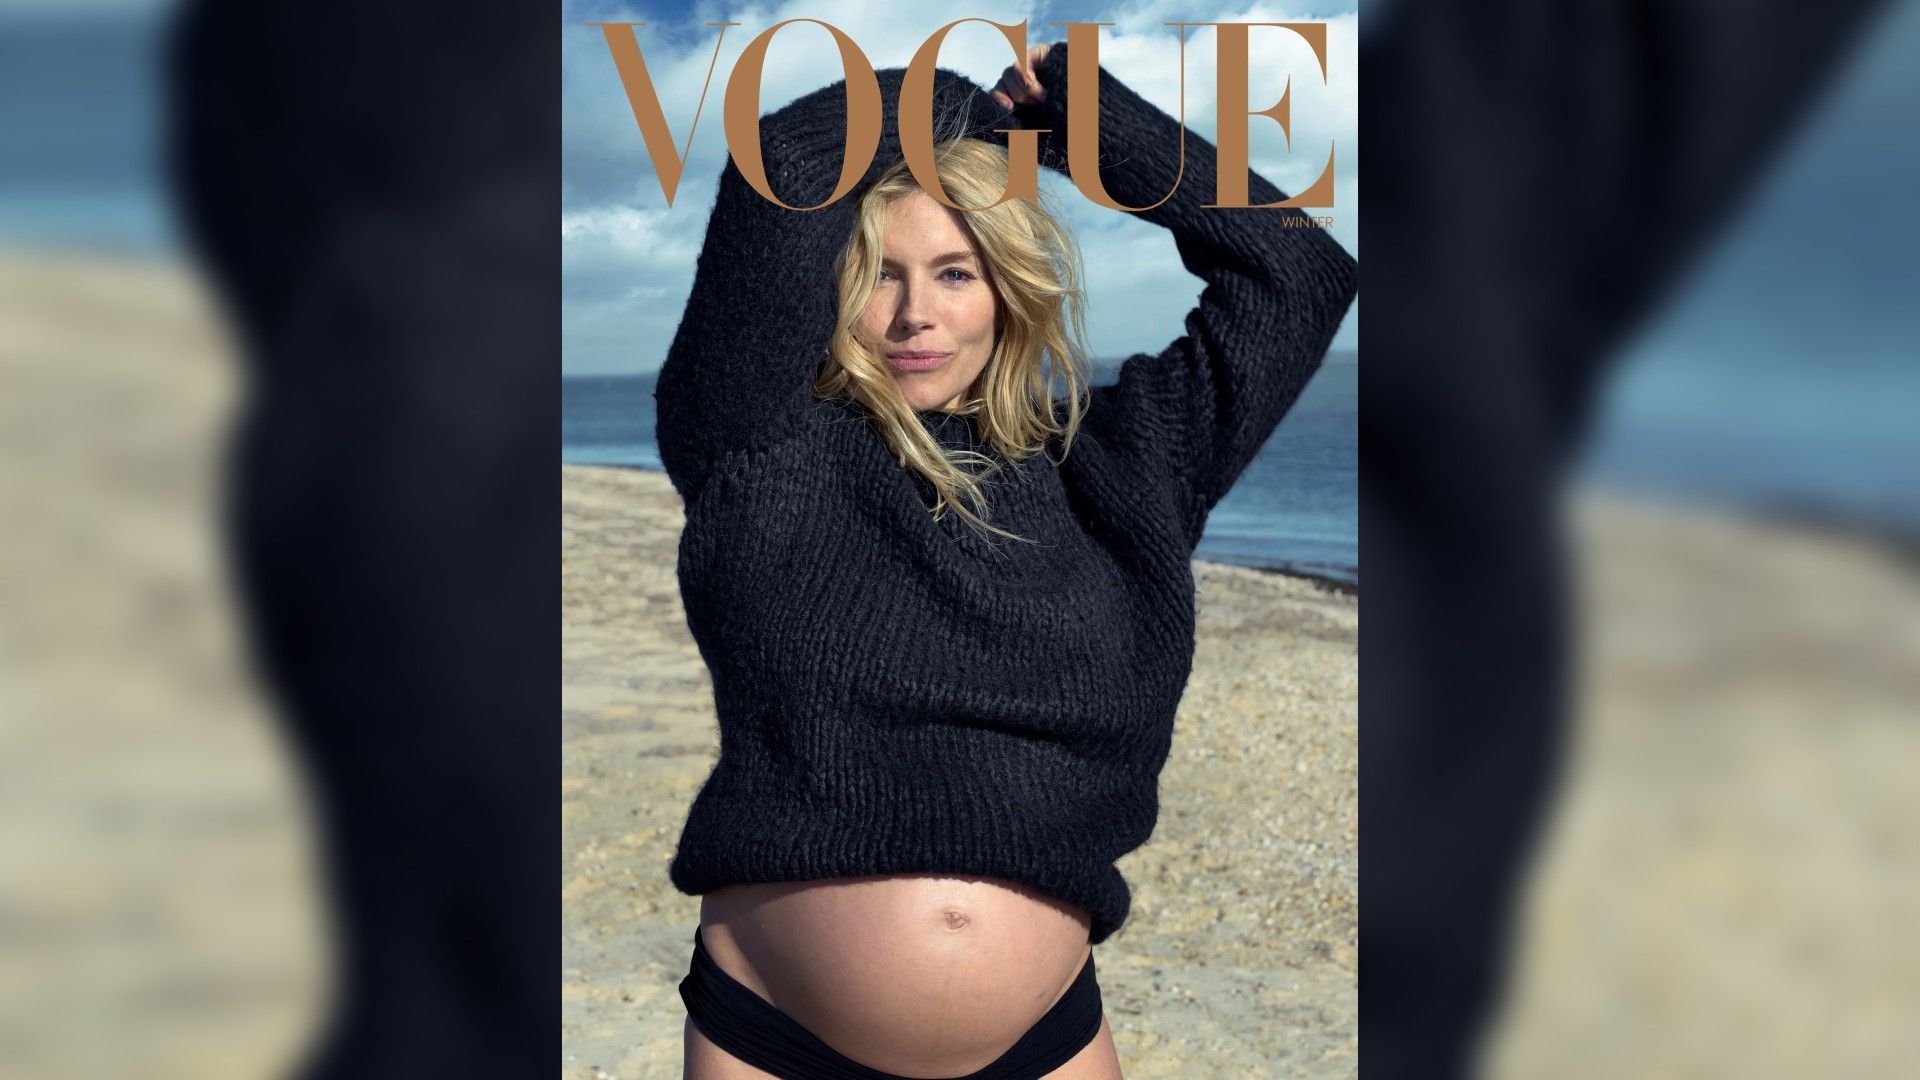 Sienna Miller on Vogue cover